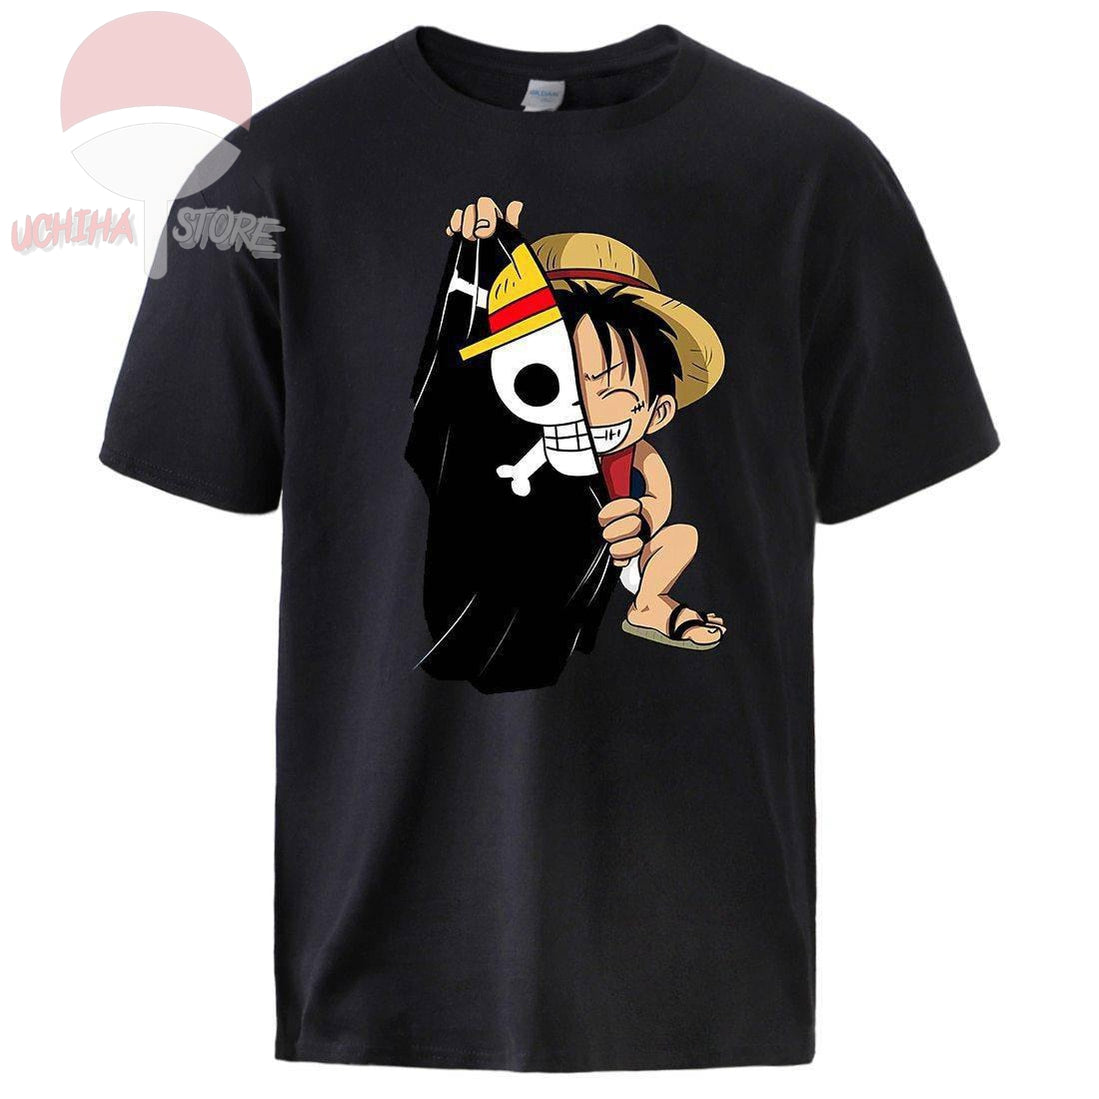 One Piece Luffy T-shirt - Uchiha Store